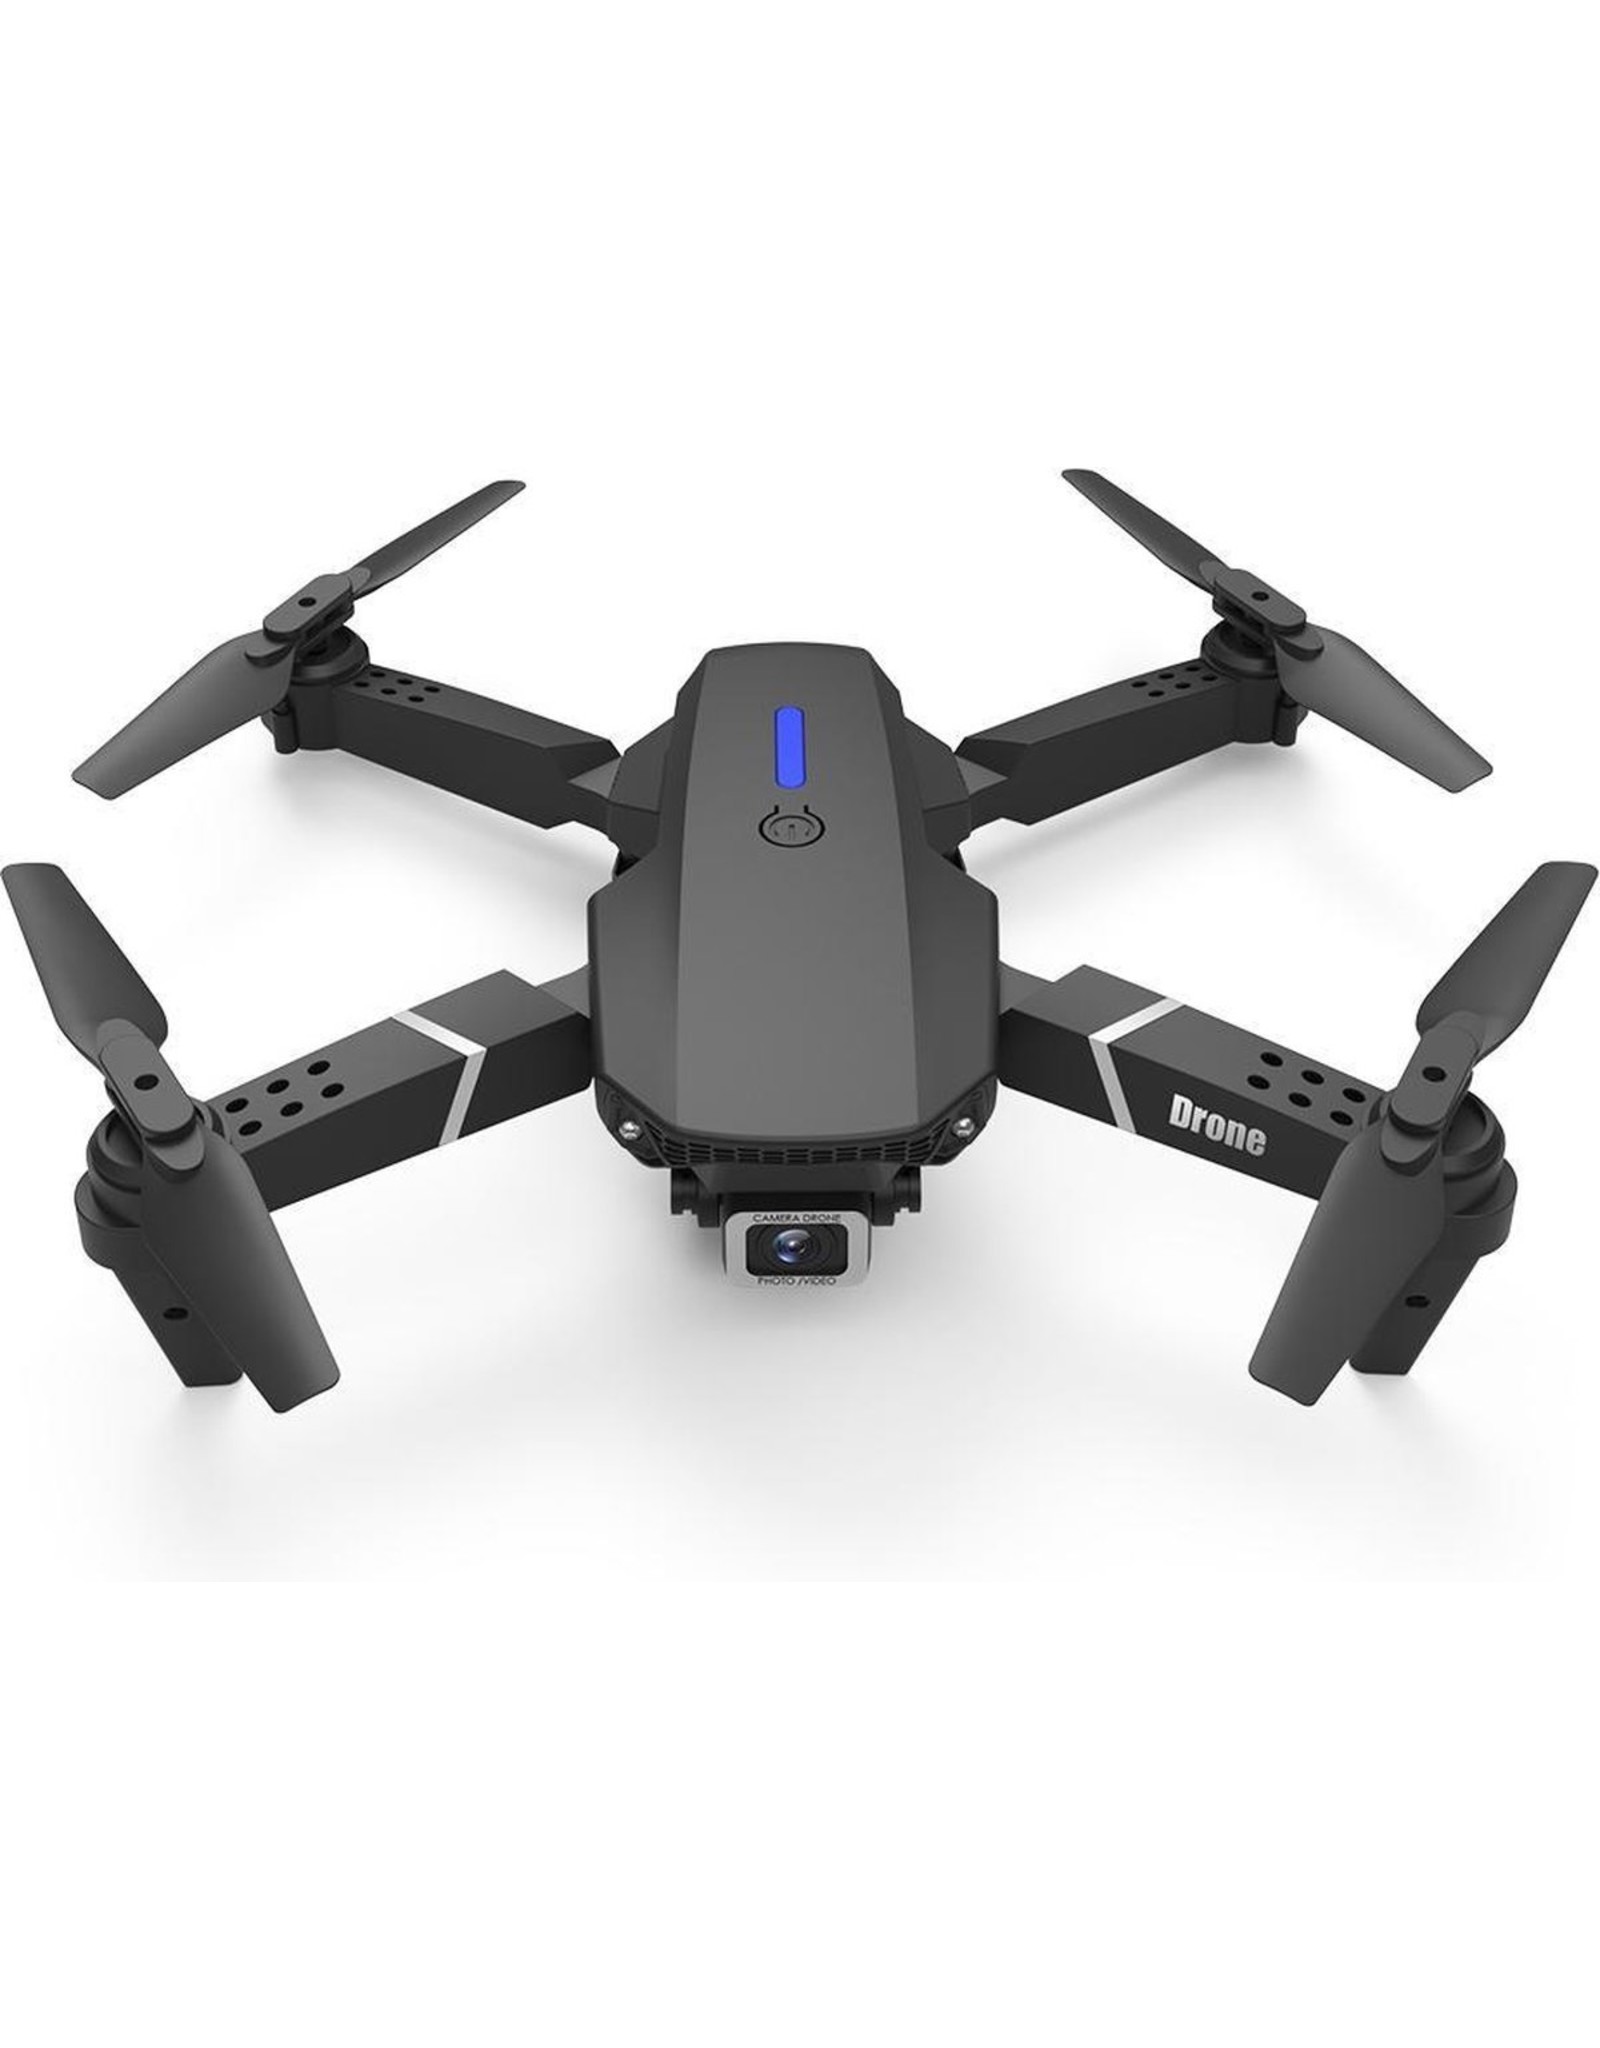 Parya Quad Drone Met camera en opbergtas Full HD Camera 2 extra Accu's